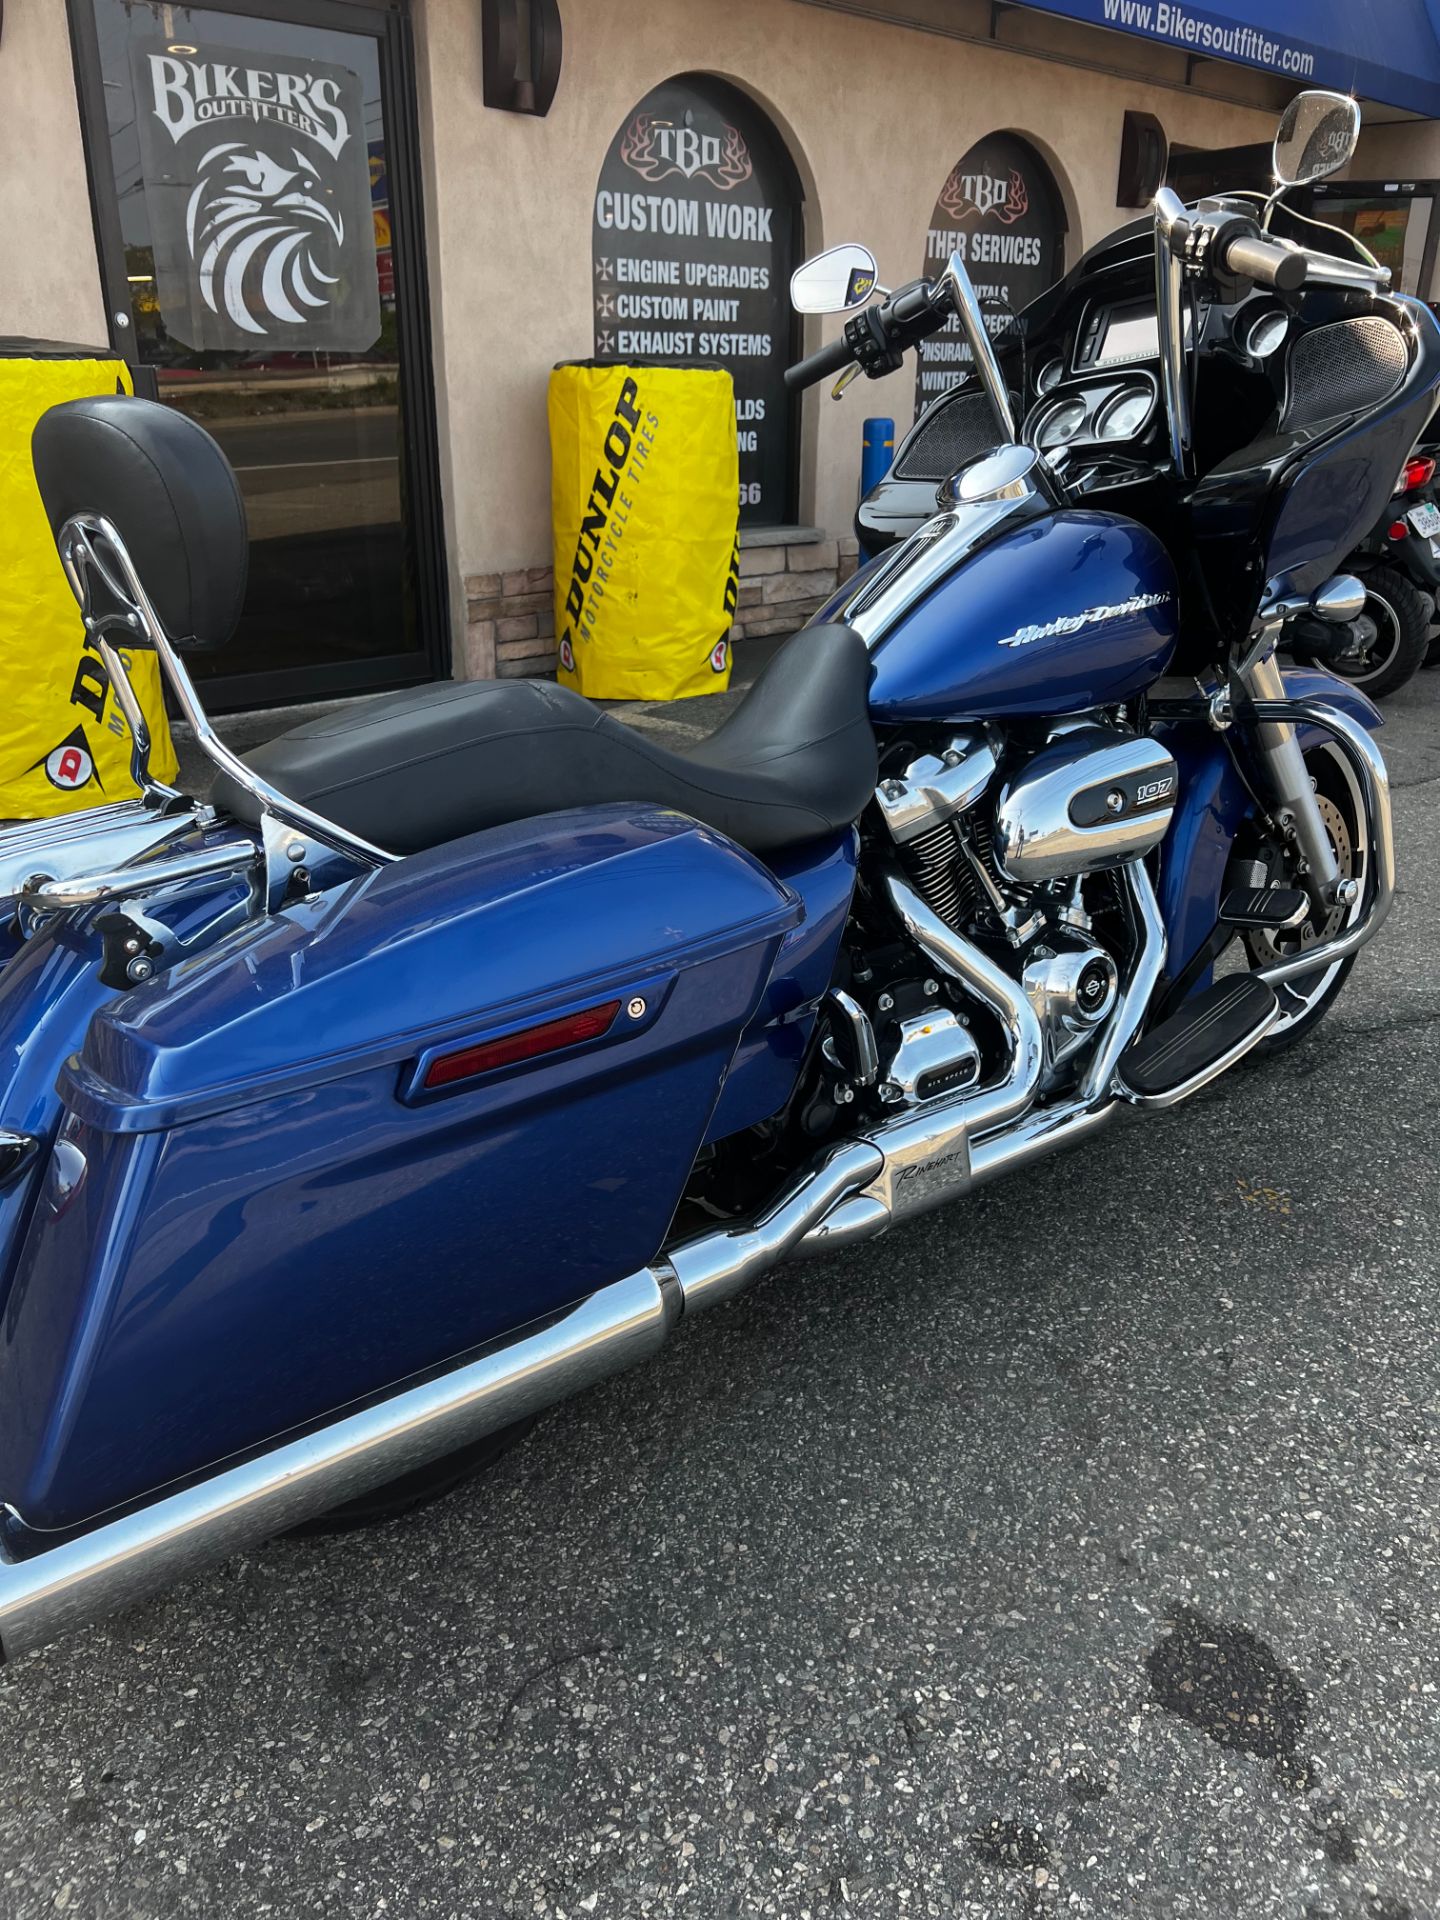 2017 Harley Davidson Roadglide Special in Revere, Massachusetts - Photo 3